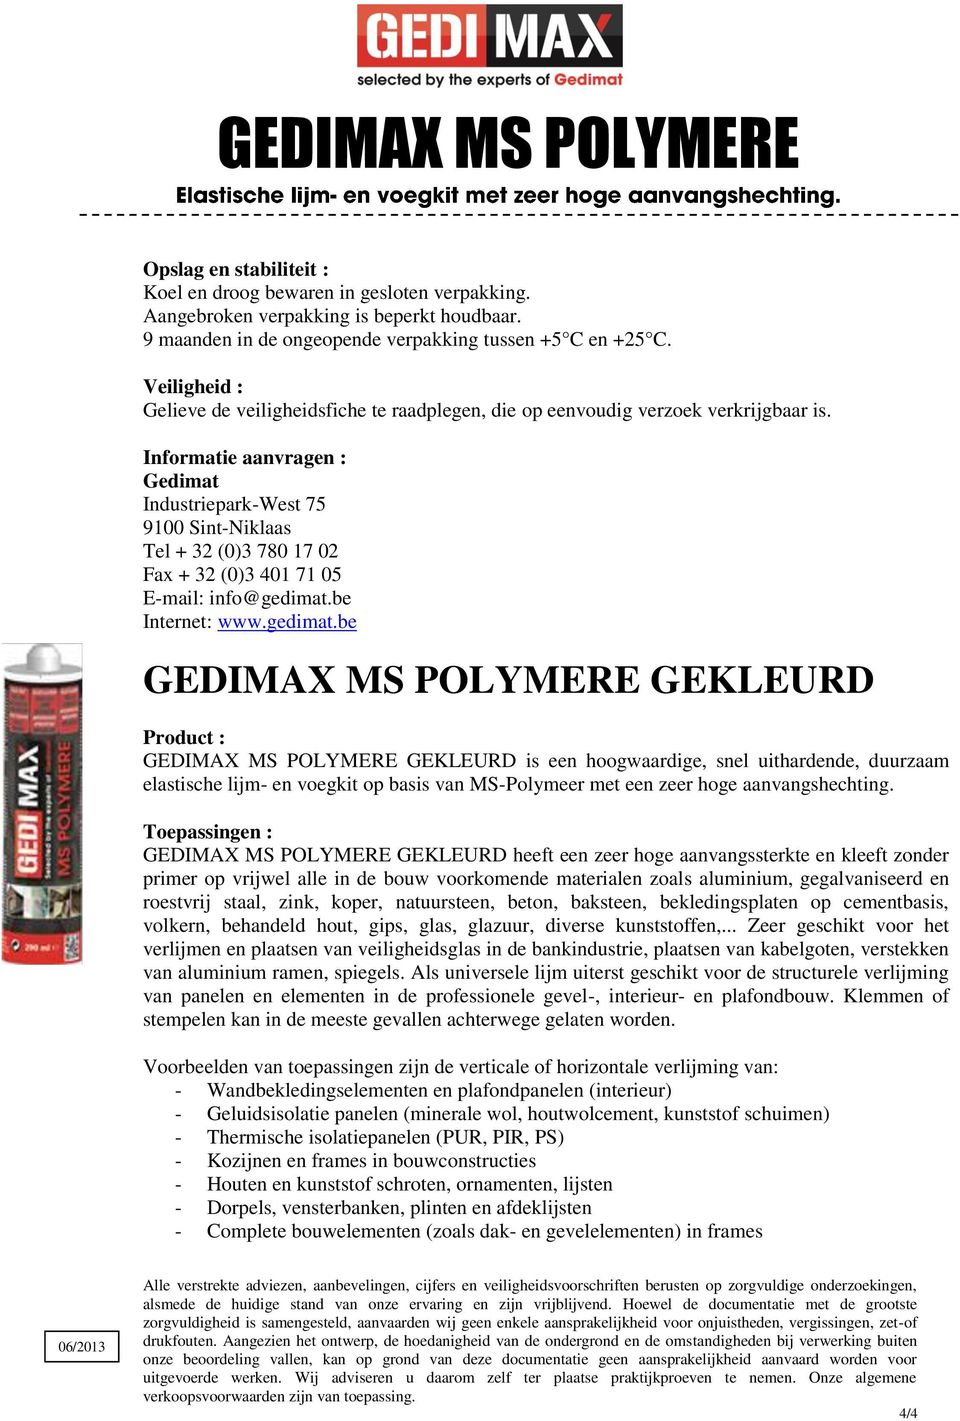 Informatie aanvragen : Gedimat Industriepark-West 75 9100 Sint-Niklaas Tel + 32 (0)3 780 17 02 Fax + 32 (0)3 401 71 05 E-mail: info@gedimat.